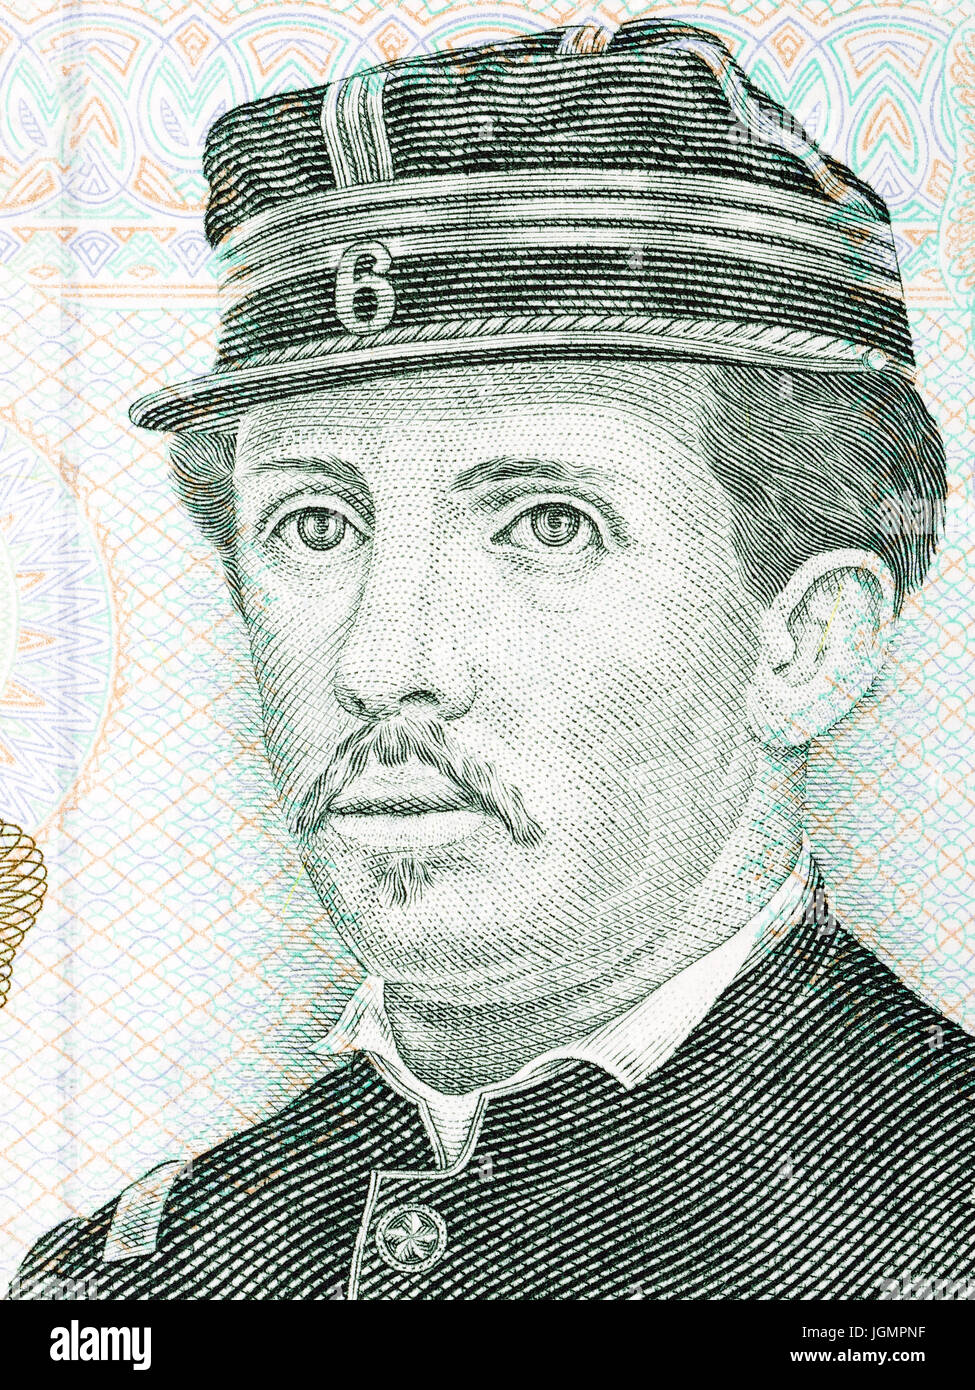 Ignacio Carrera Pinto portrait from Chilean money Stock Photo - Alamy